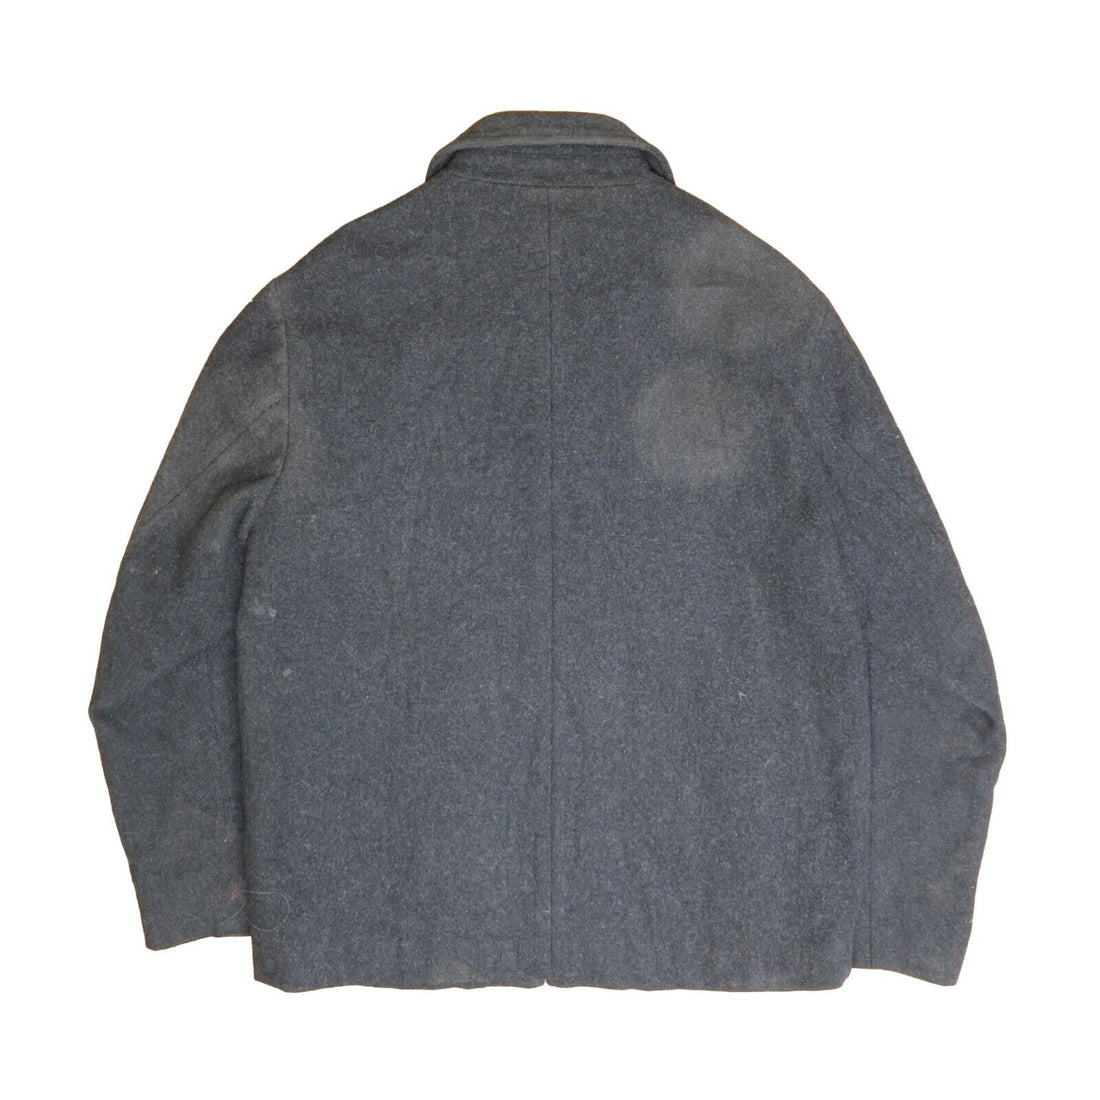 Vintage GAP Wool Coat Jacket Size Medium Gray Full Zip